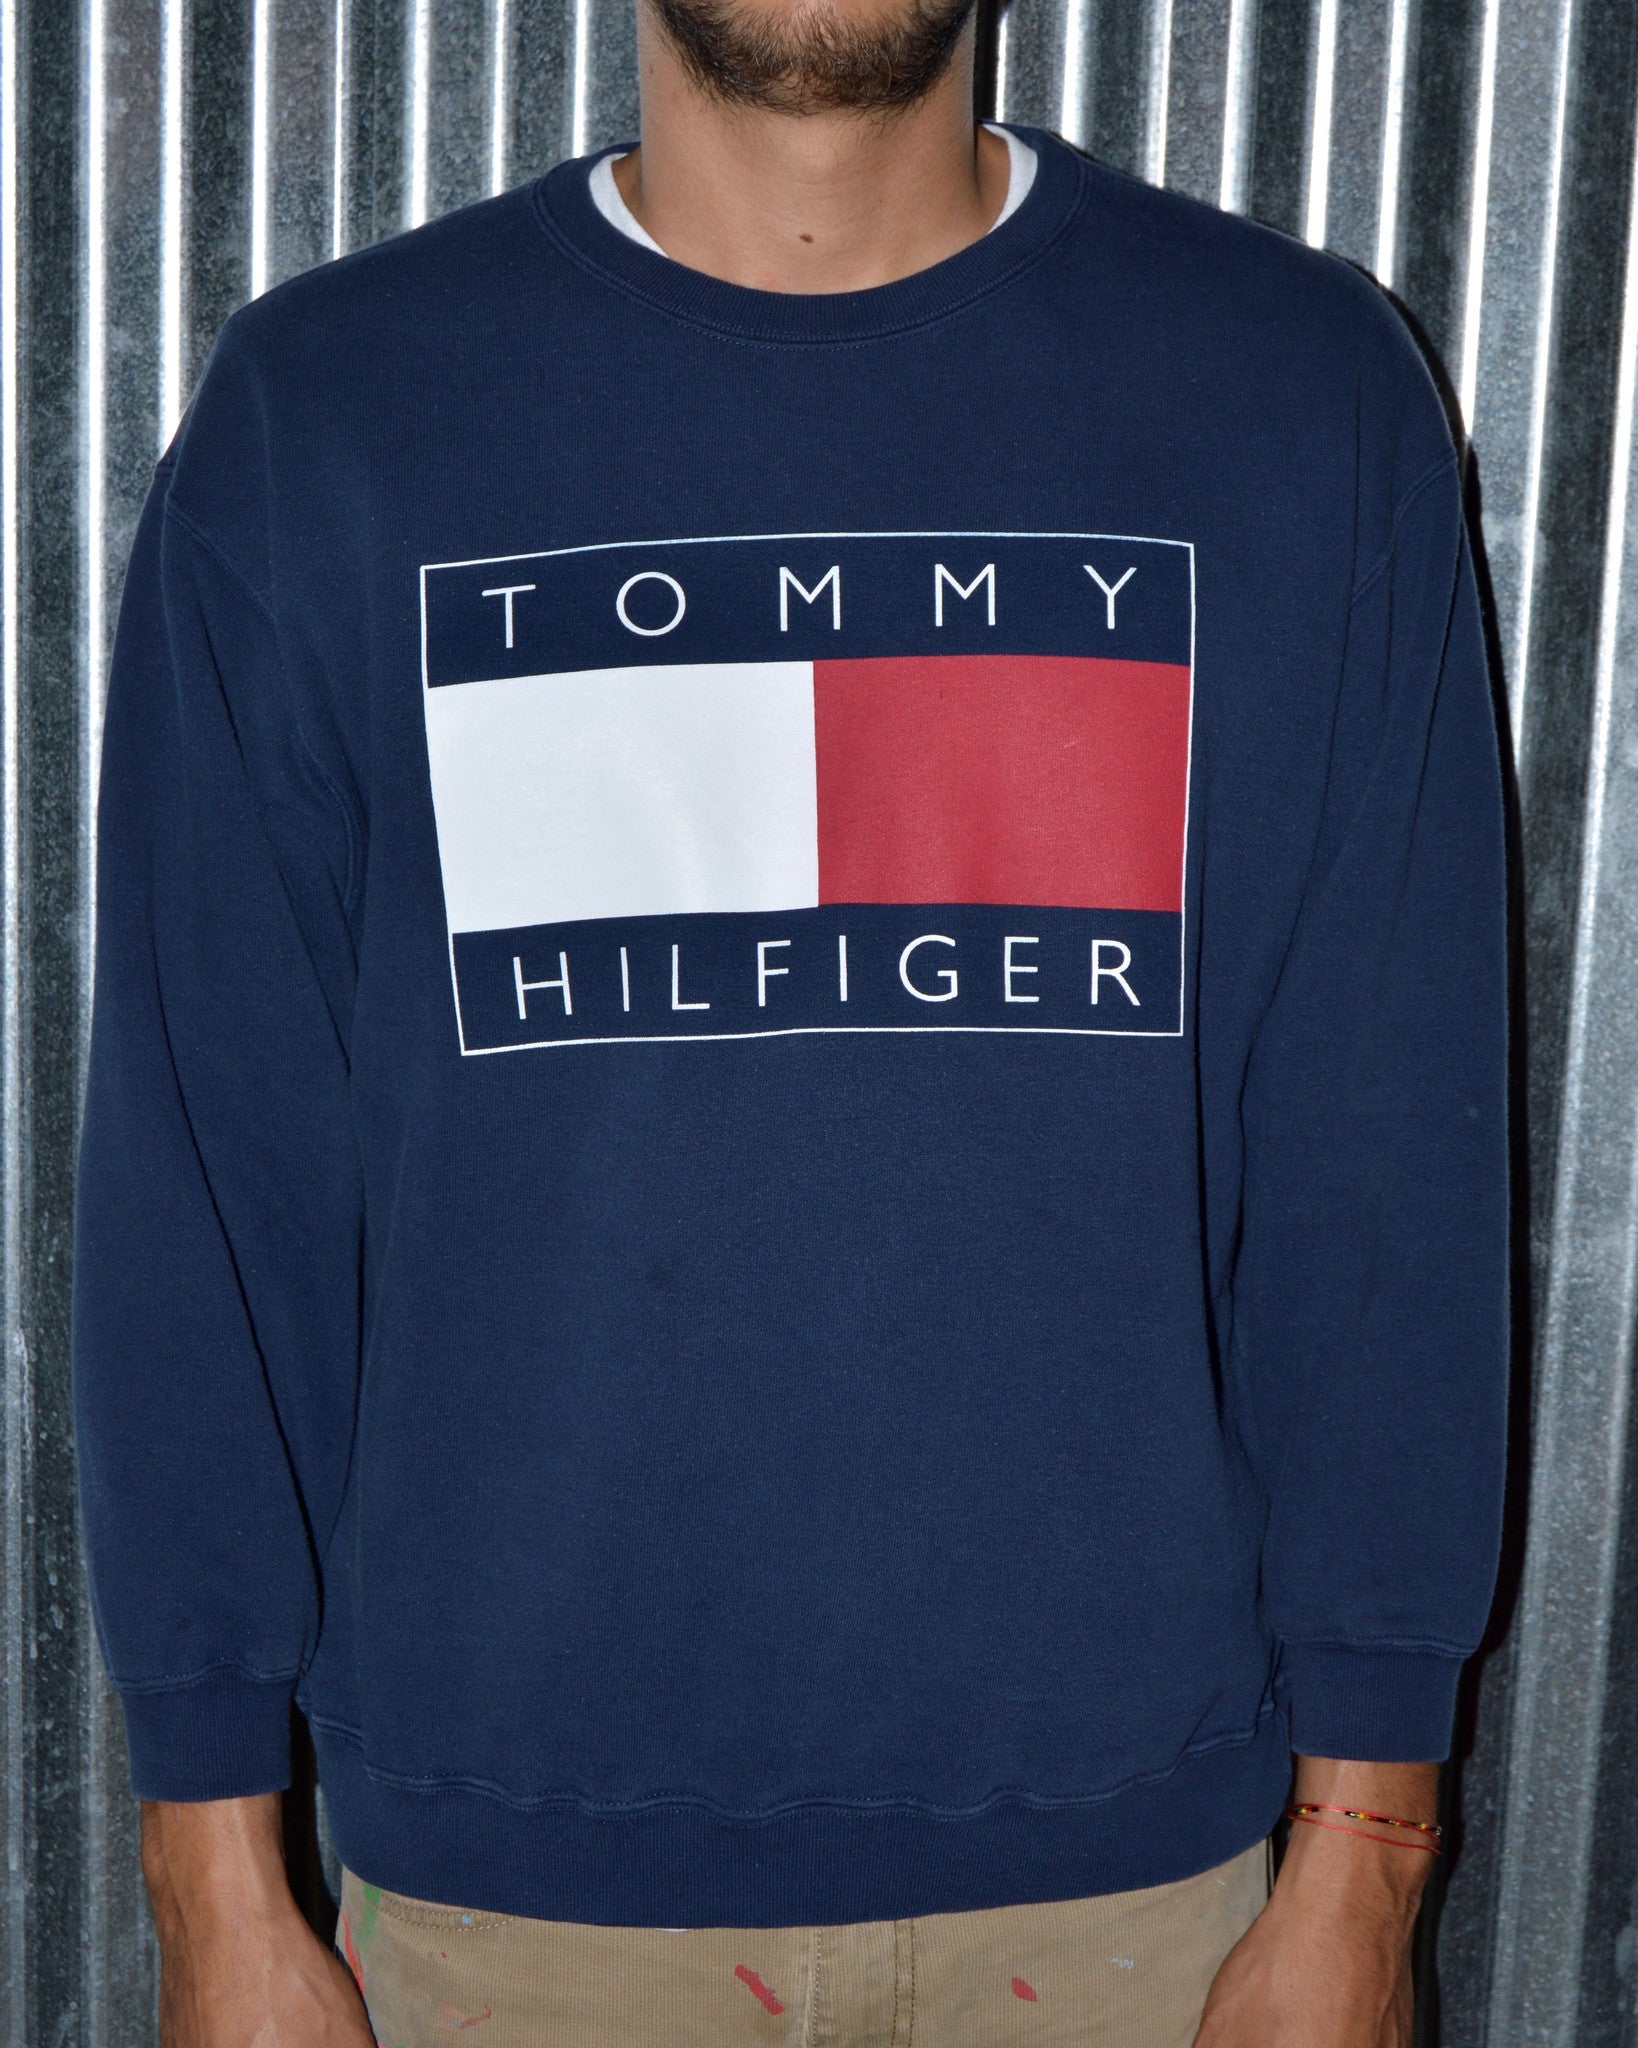 Blue L sz PeoplesVintage Hilfiger Logo – Tommy Navy Vintage Sweatshirt